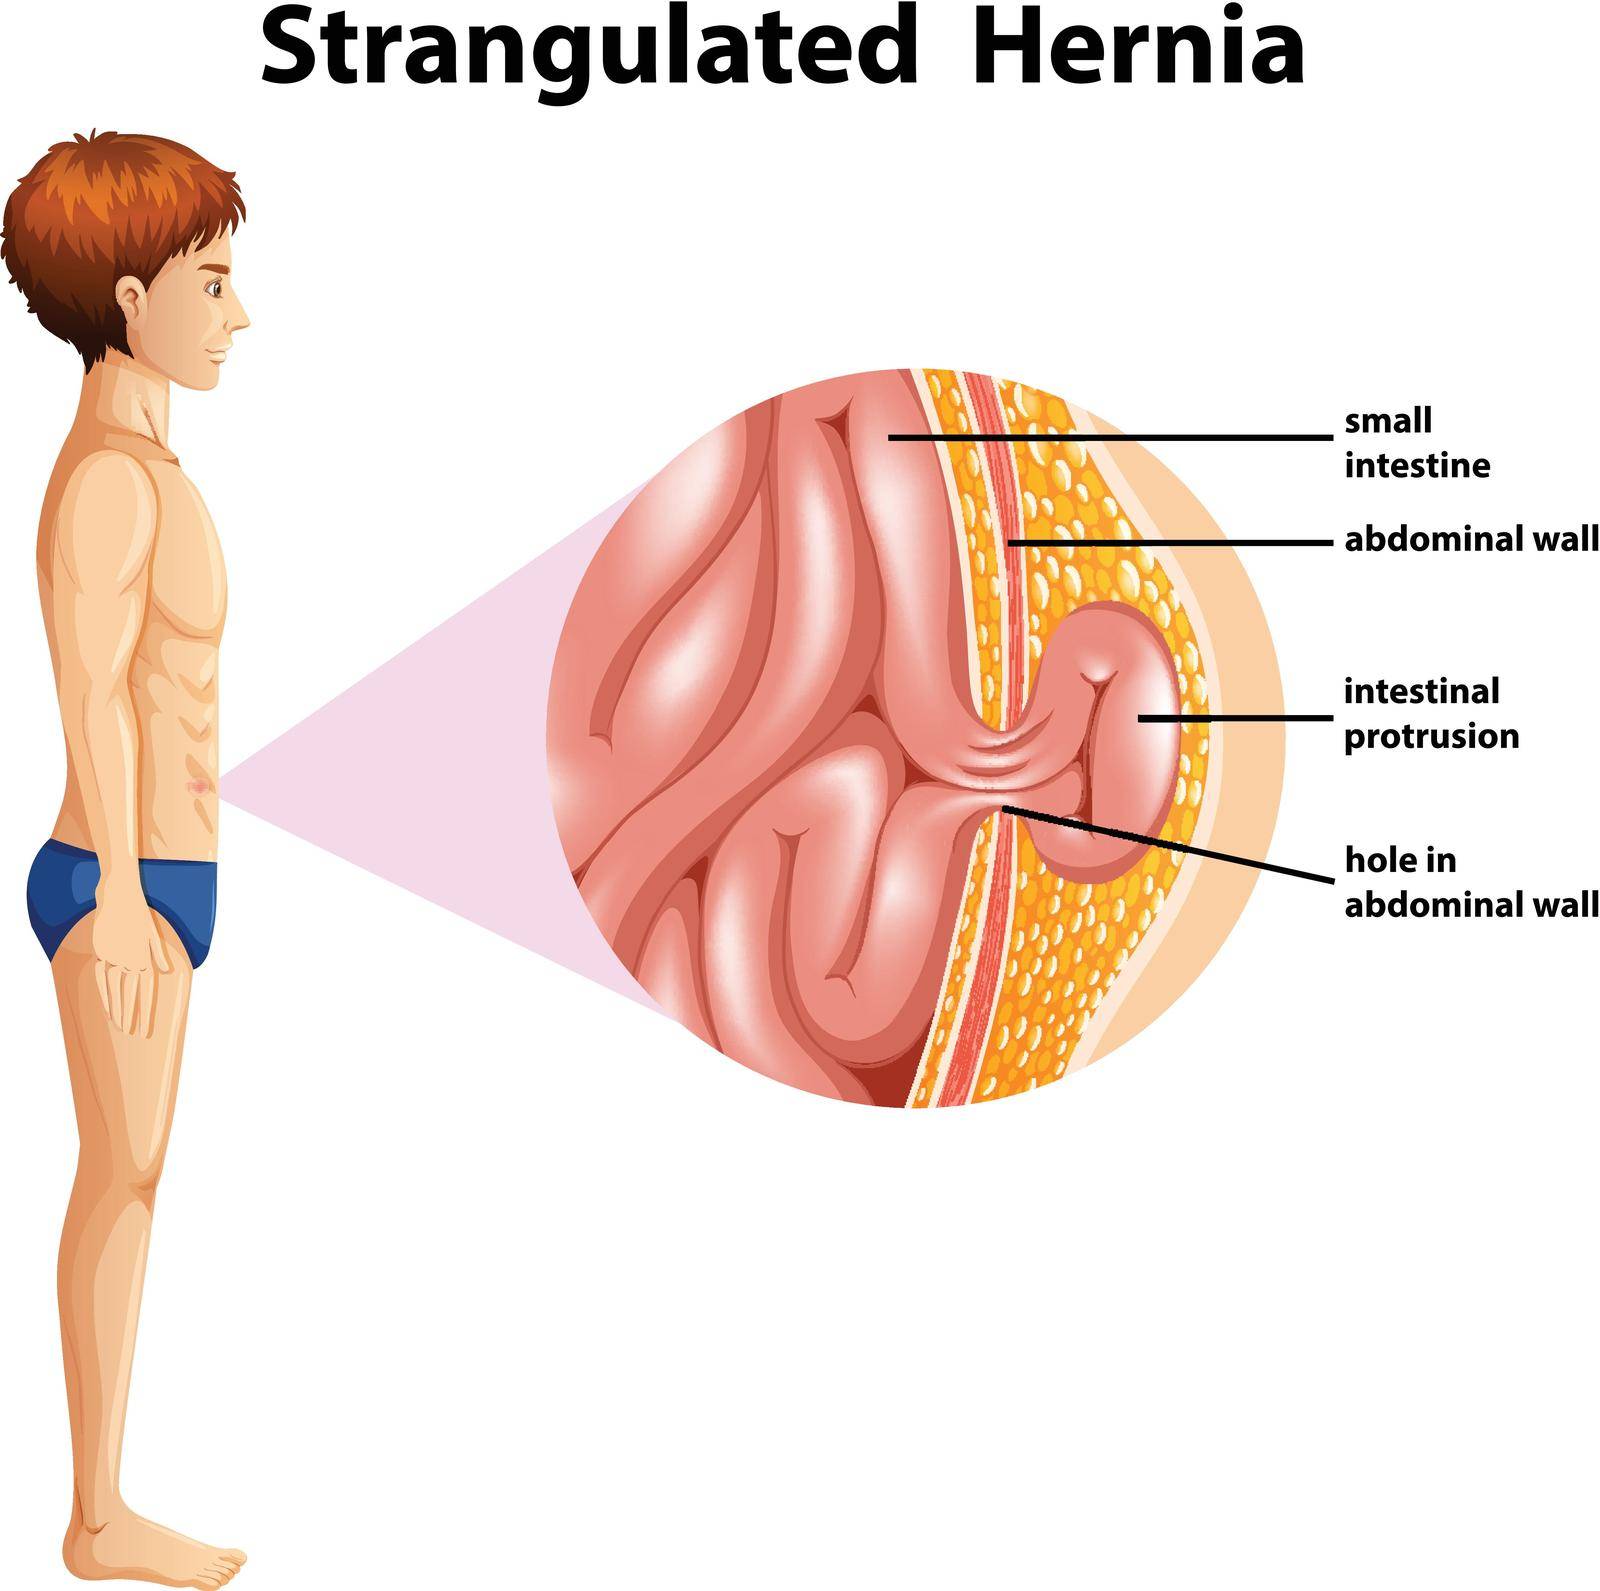 A Human Anatomy Strangulated Hernia by iimages